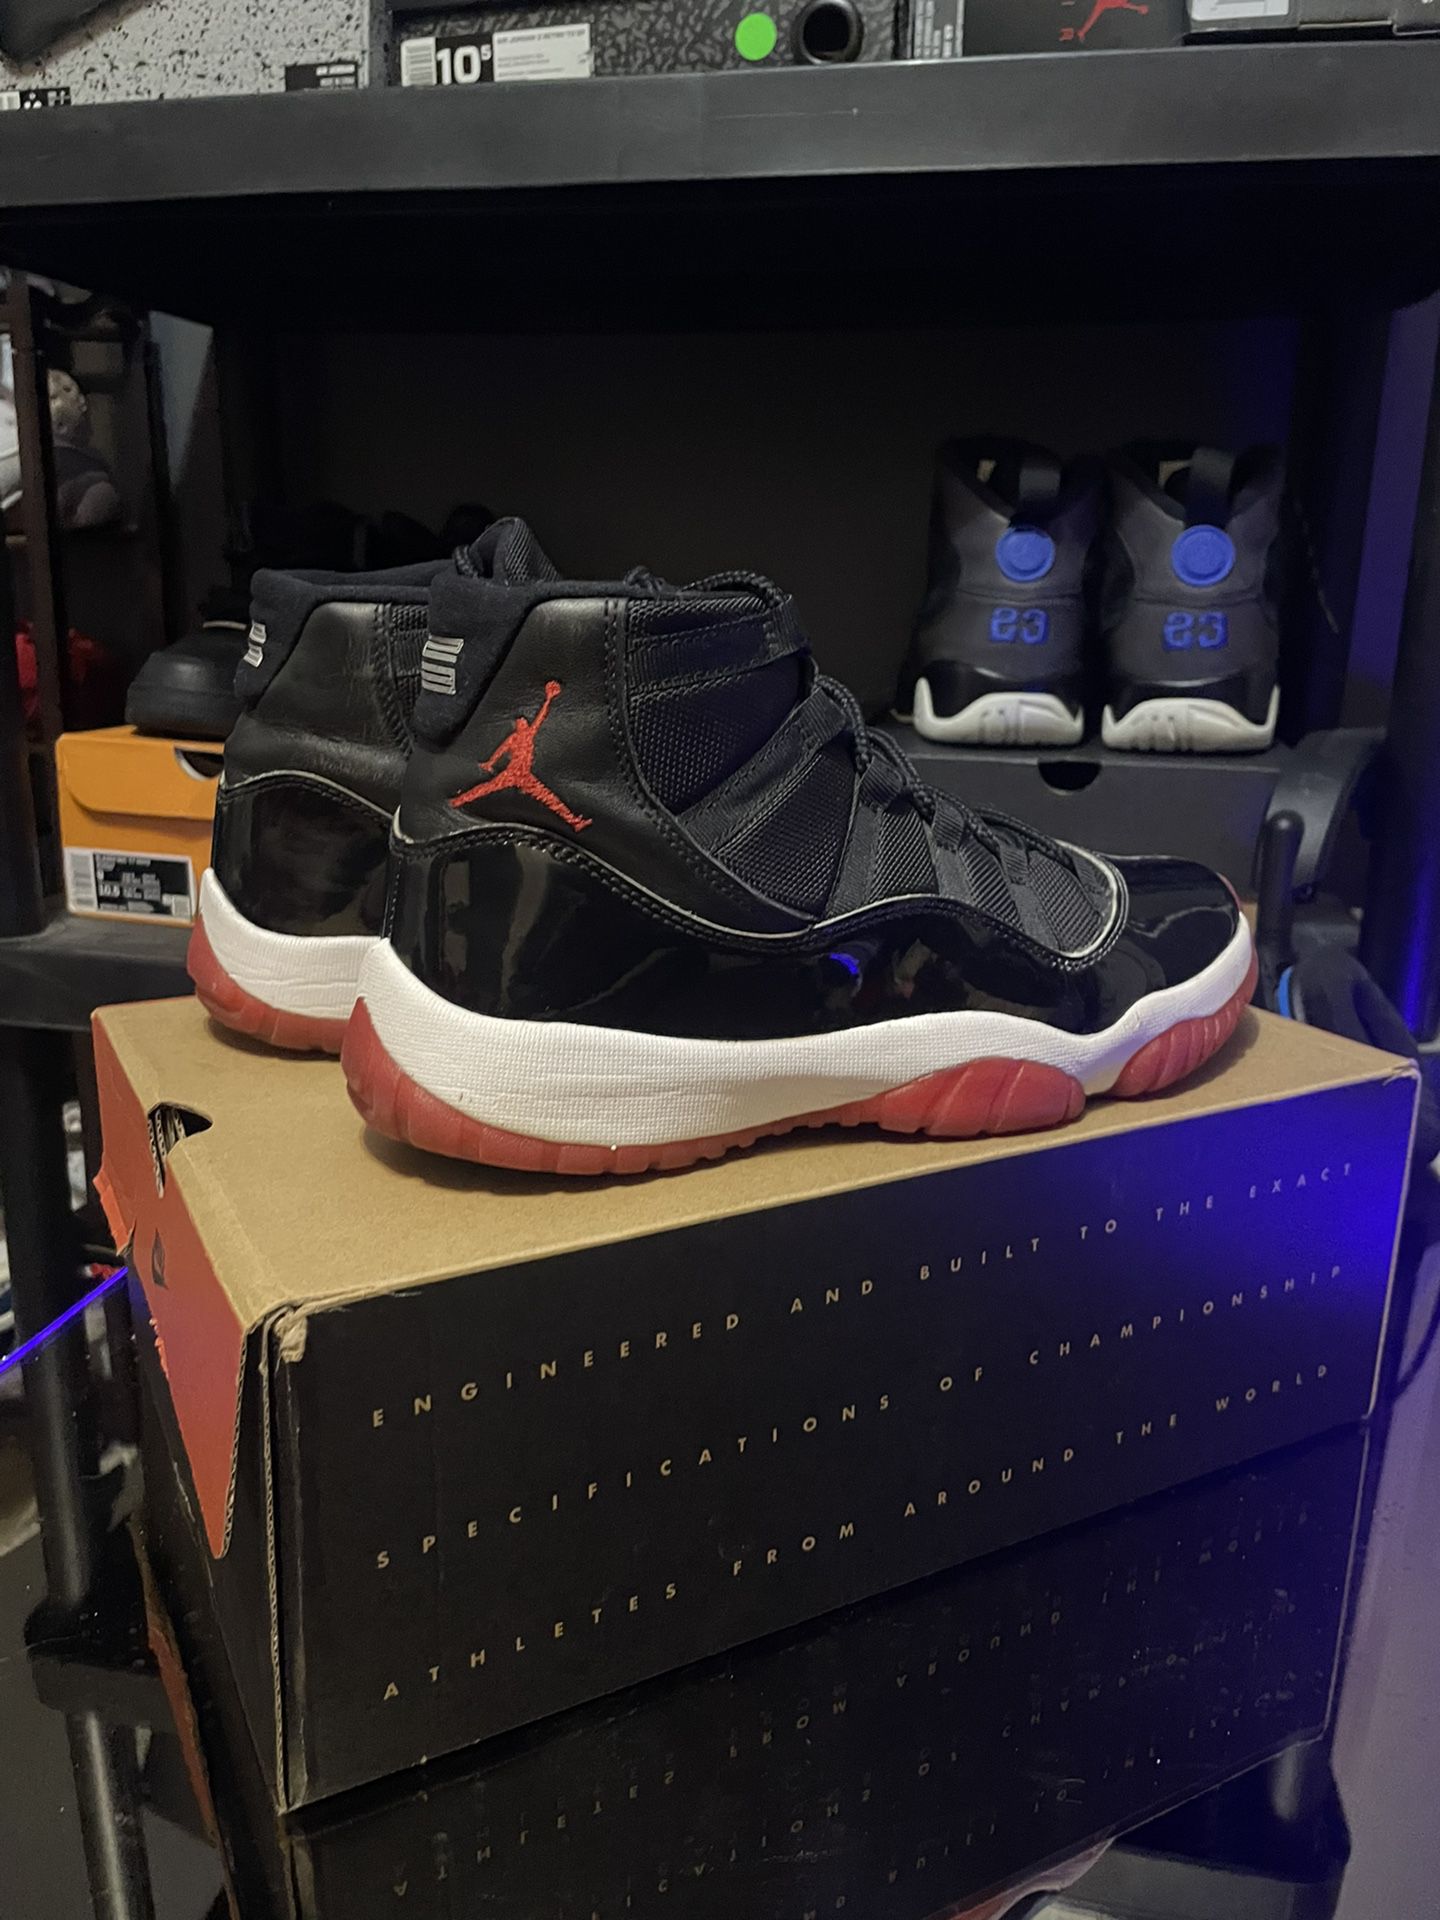 Bred Jordan 11 2019 Size 10